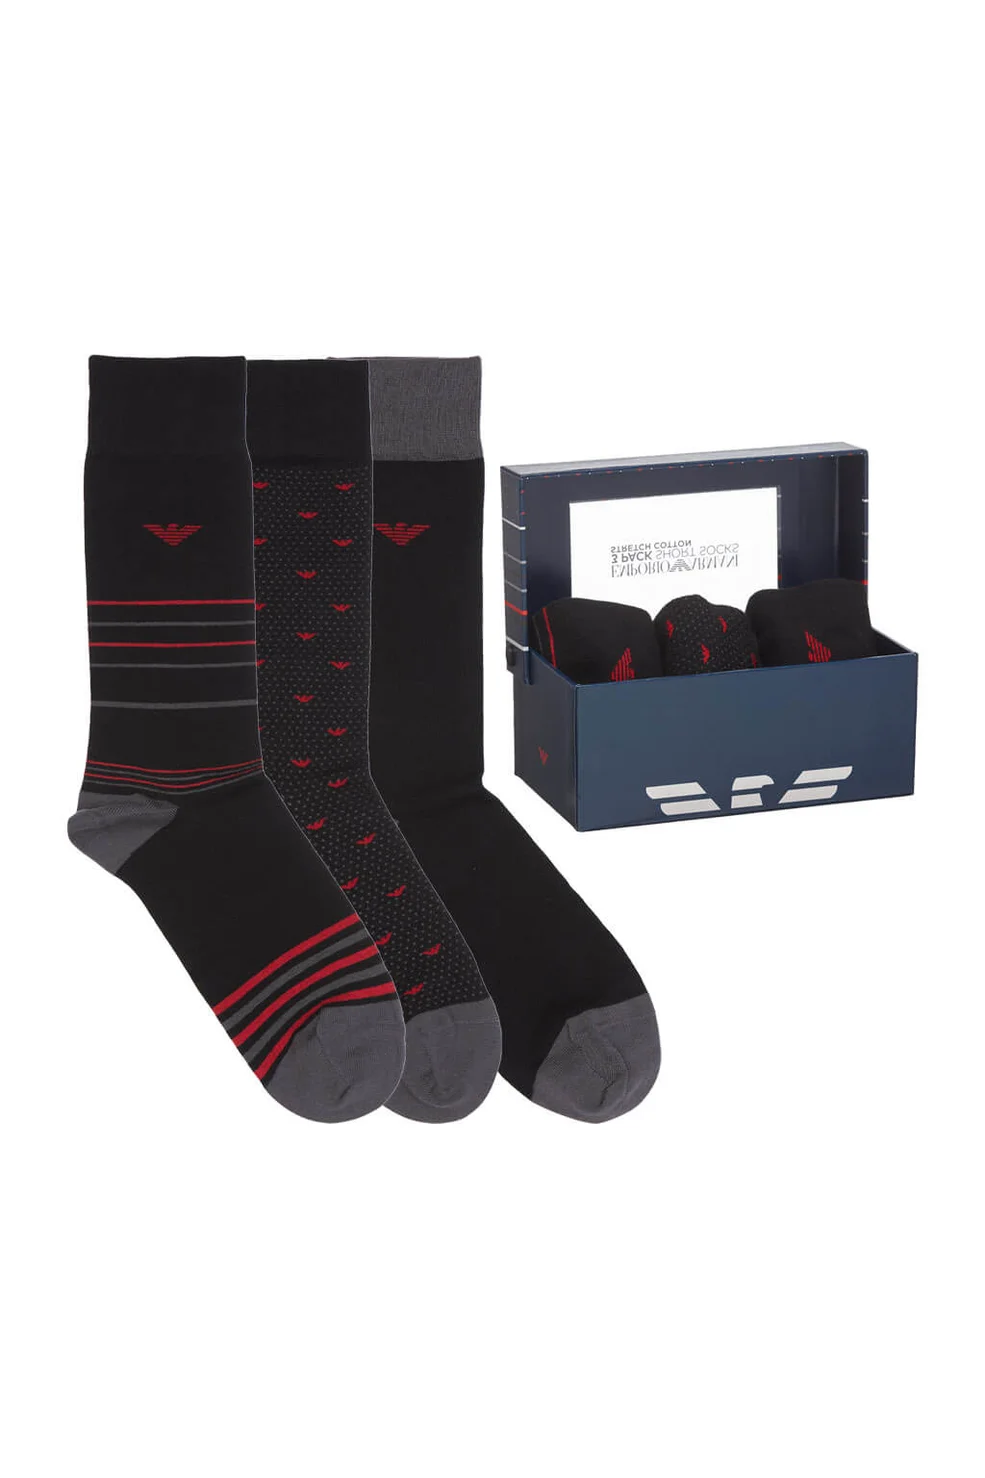 Emporio Armani Men's 3 Pack Socks - Multi Image 1